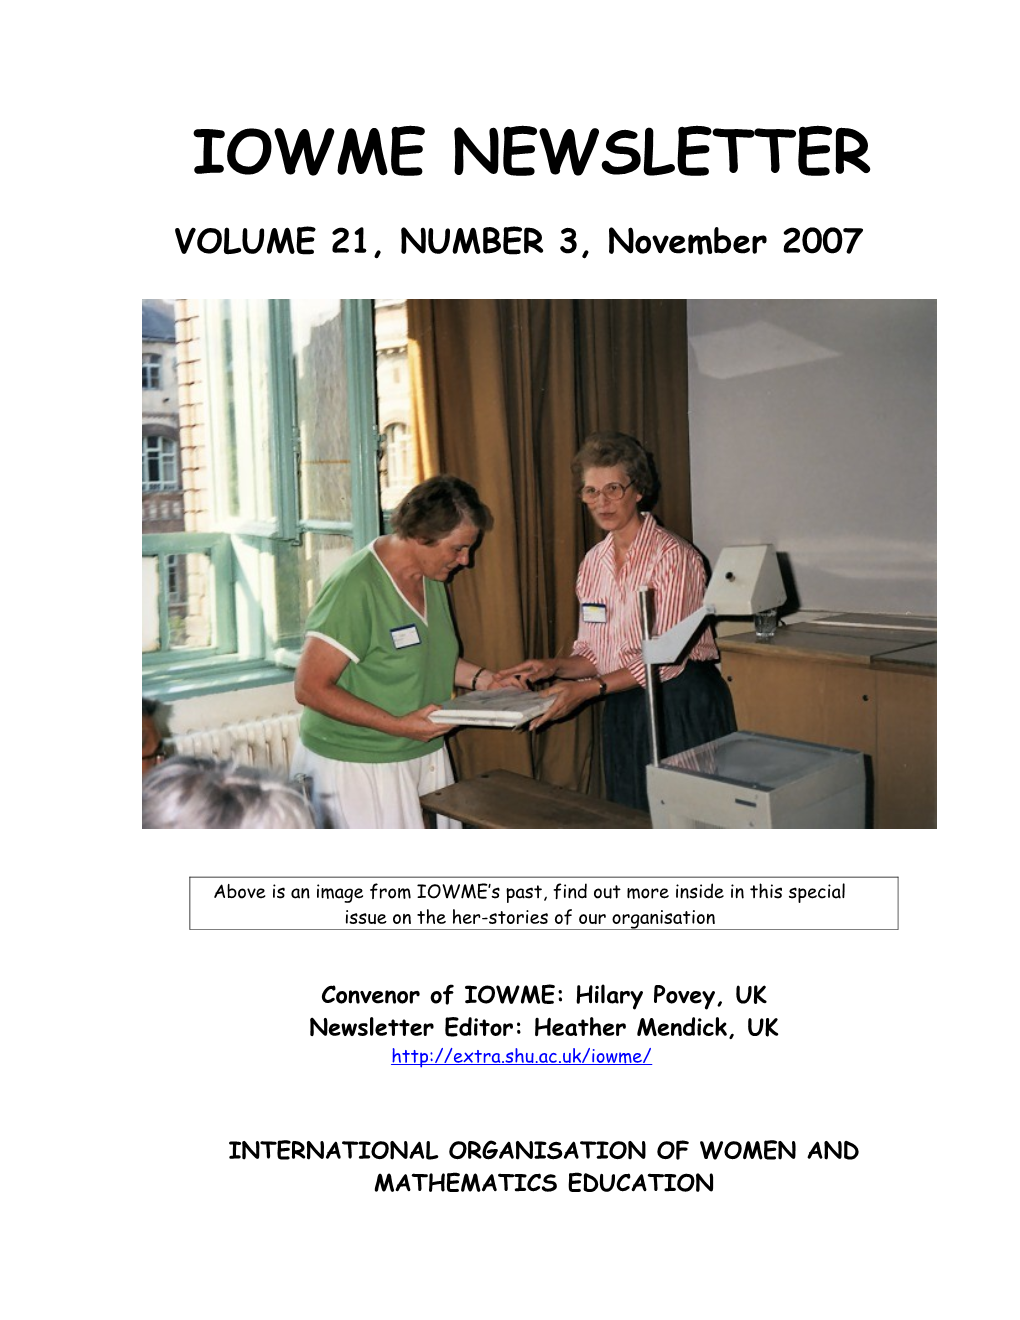 IOWME Newsletter Volume 21, No. 3